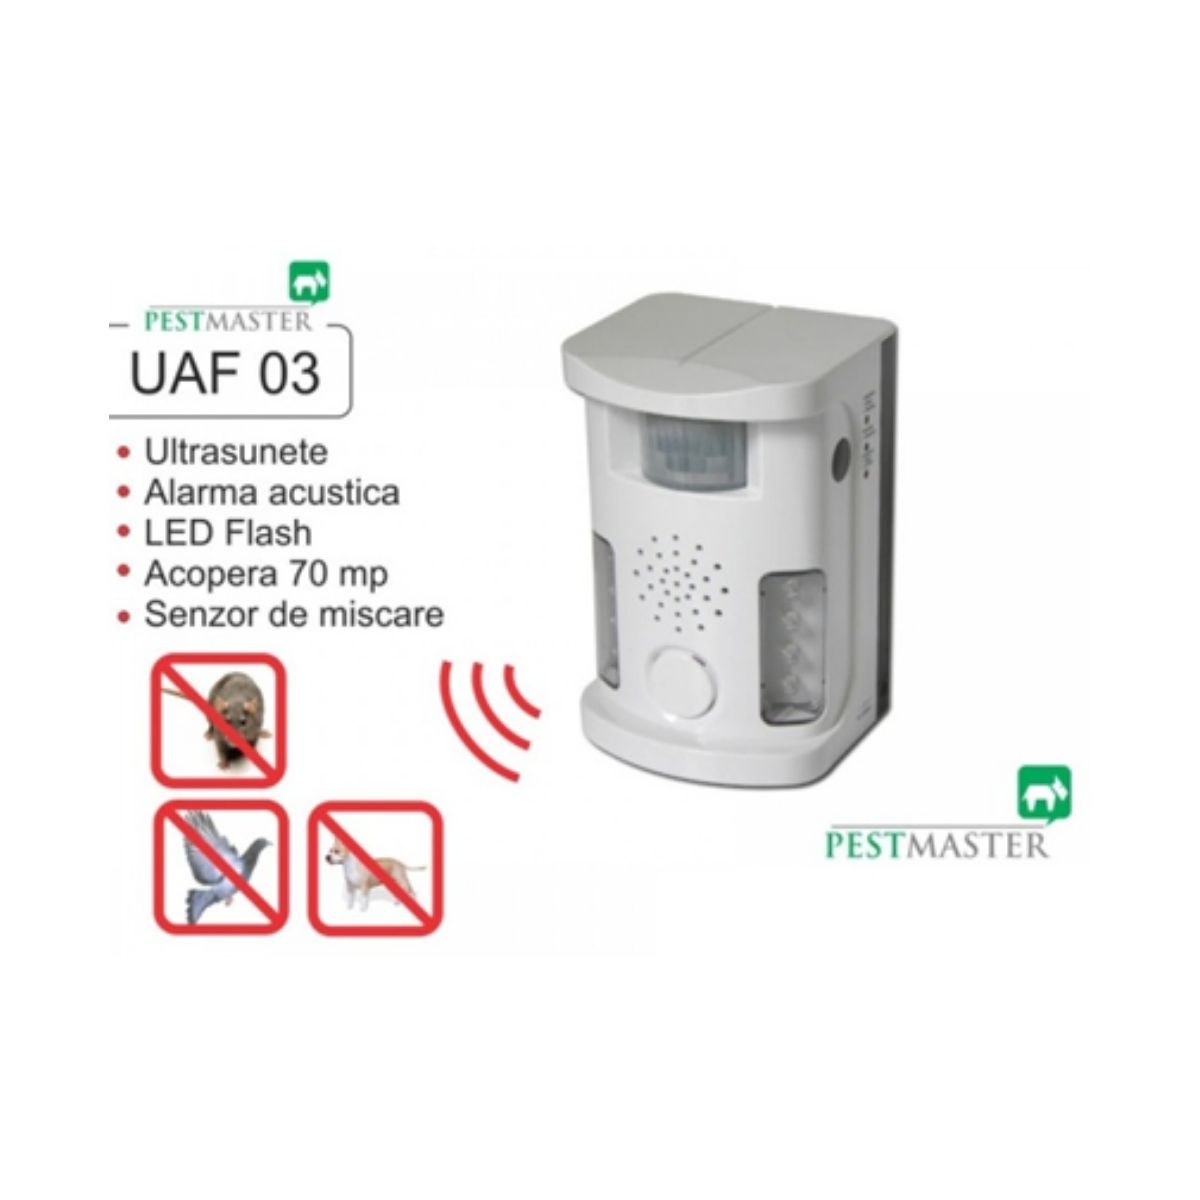 Aparate si dispozitive - Dispozitiv electronic PestMaster UAF03  (70 mp) Ultrasunete si Alarma Acustica, hectarul.ro